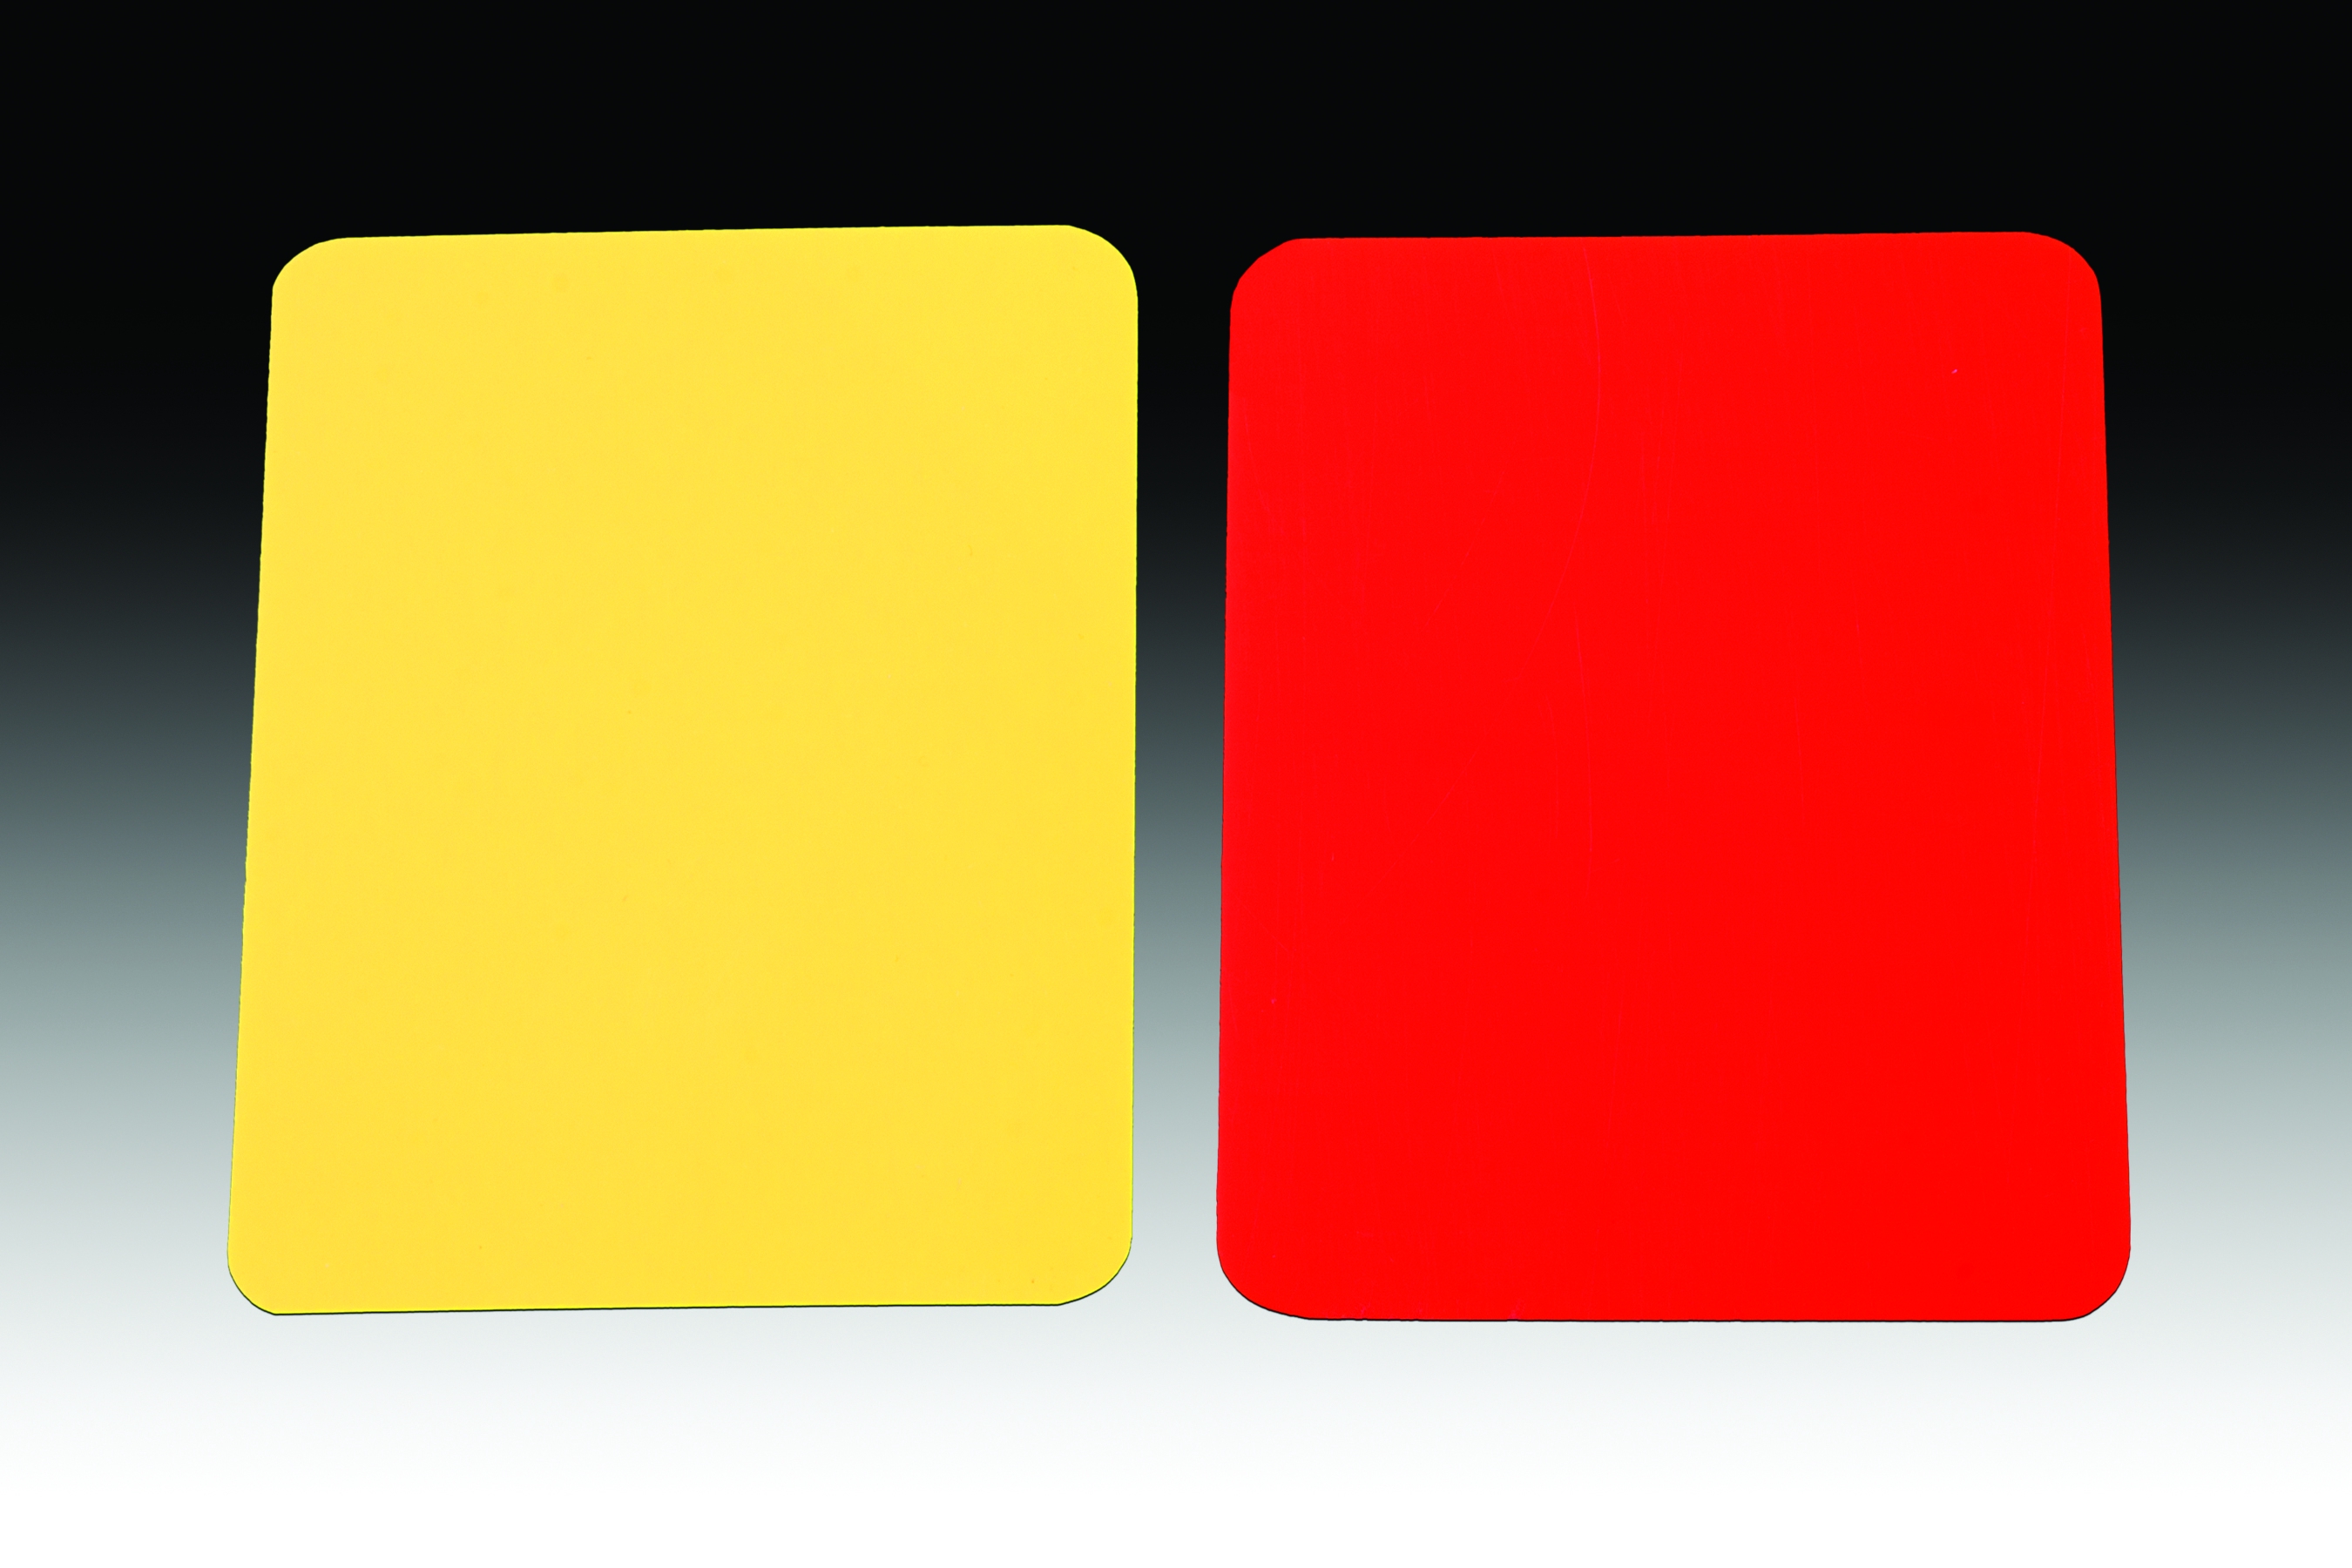 Карточка. Красная карточка. Желтая карточка. Желтая и красная карточка в футболе. Картошка красная и желтая.